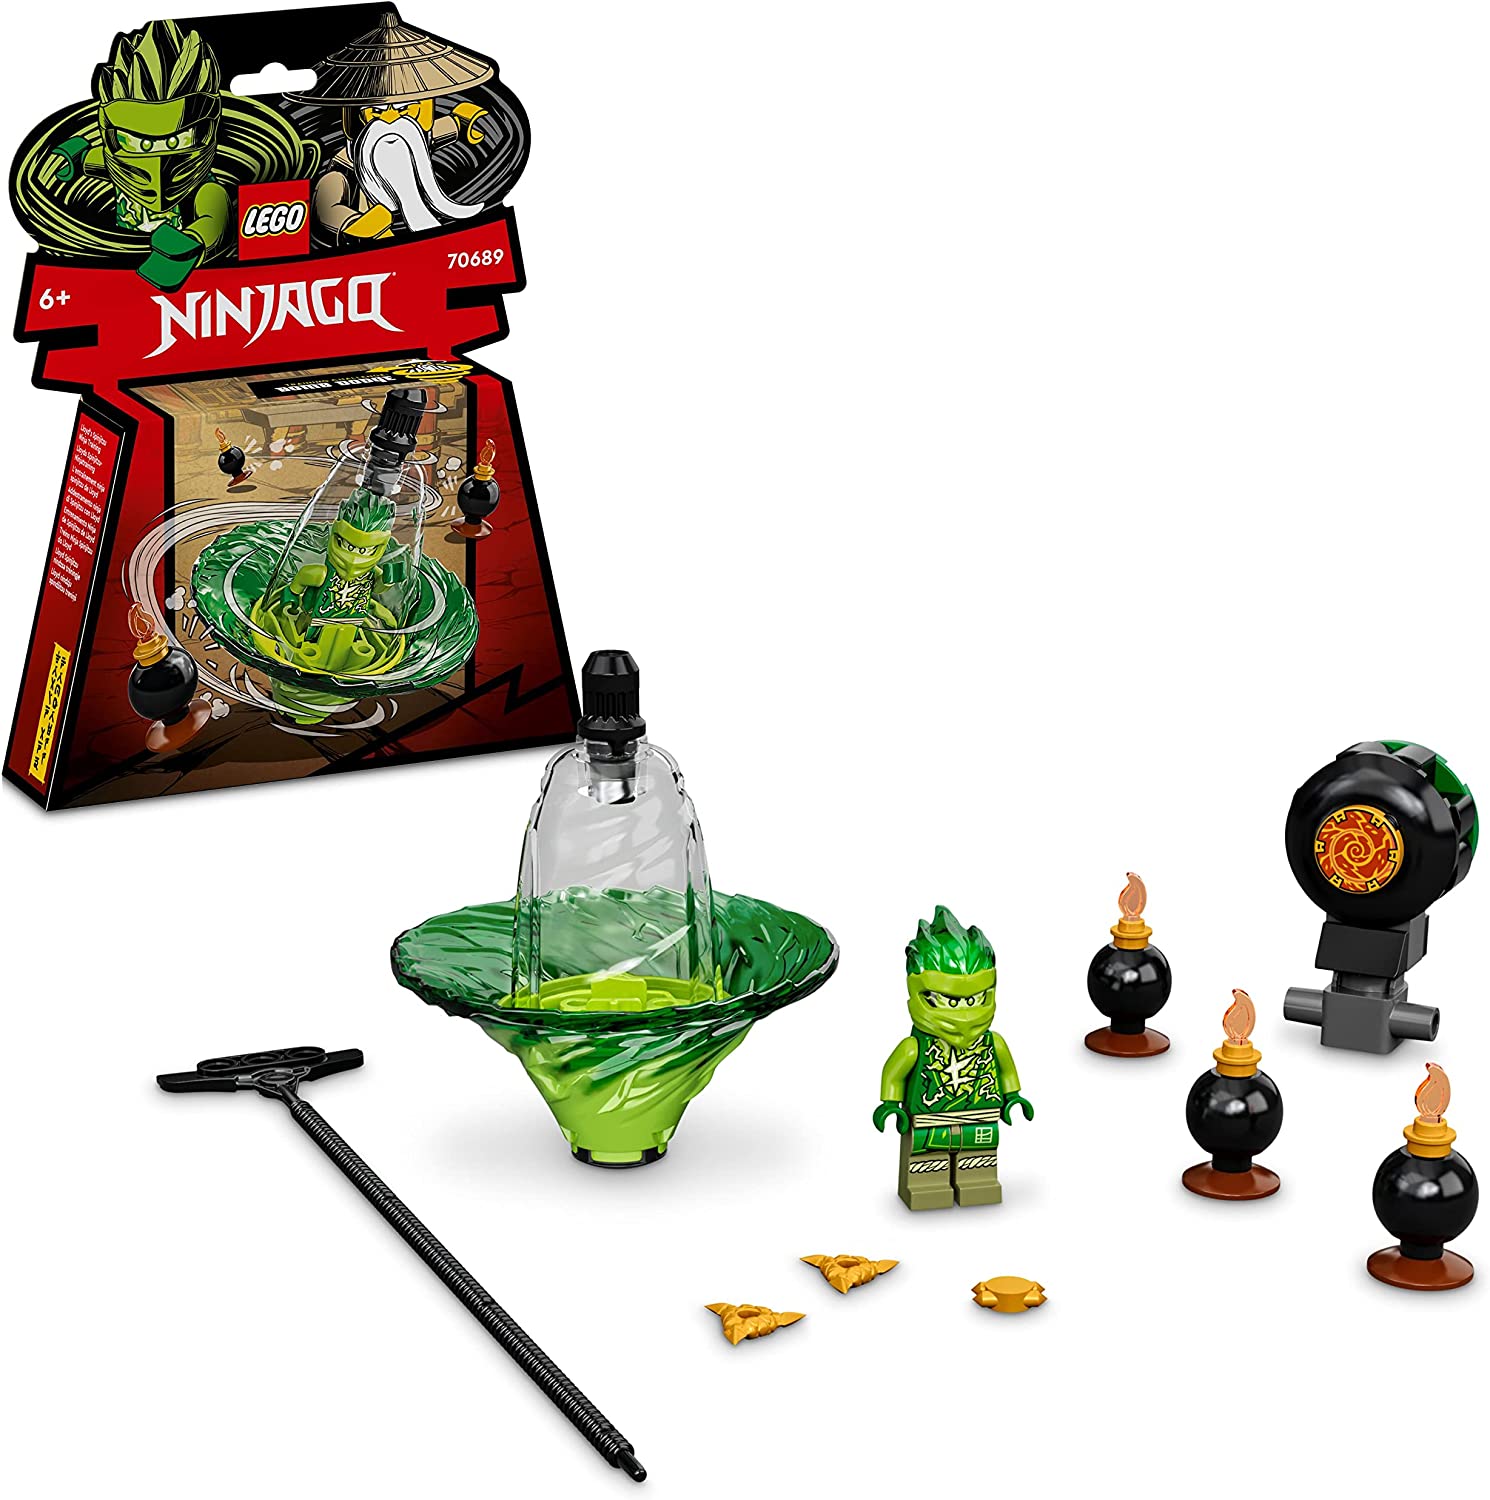 LEGO 70689 NINJAGO Lloyds Spinjitzu Ninjatraining Action Toy with Ninja Spi